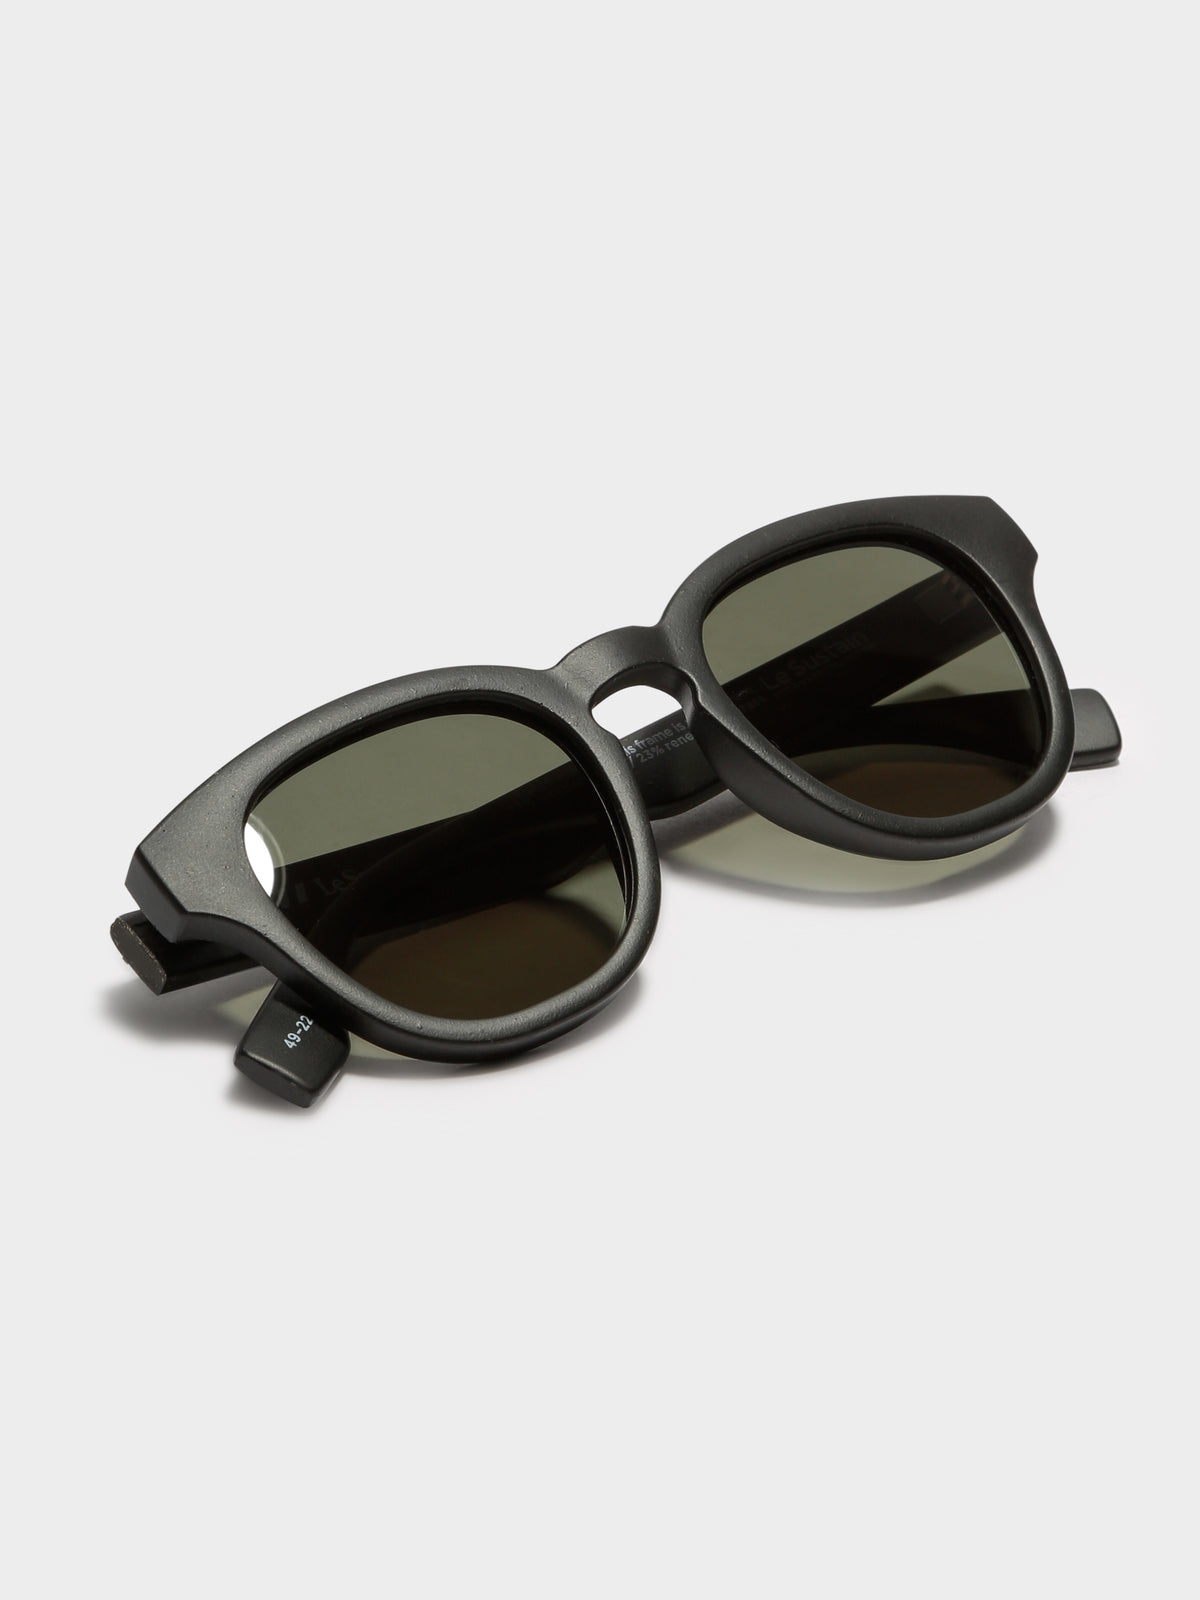 Grass Band Sunglasses in Black